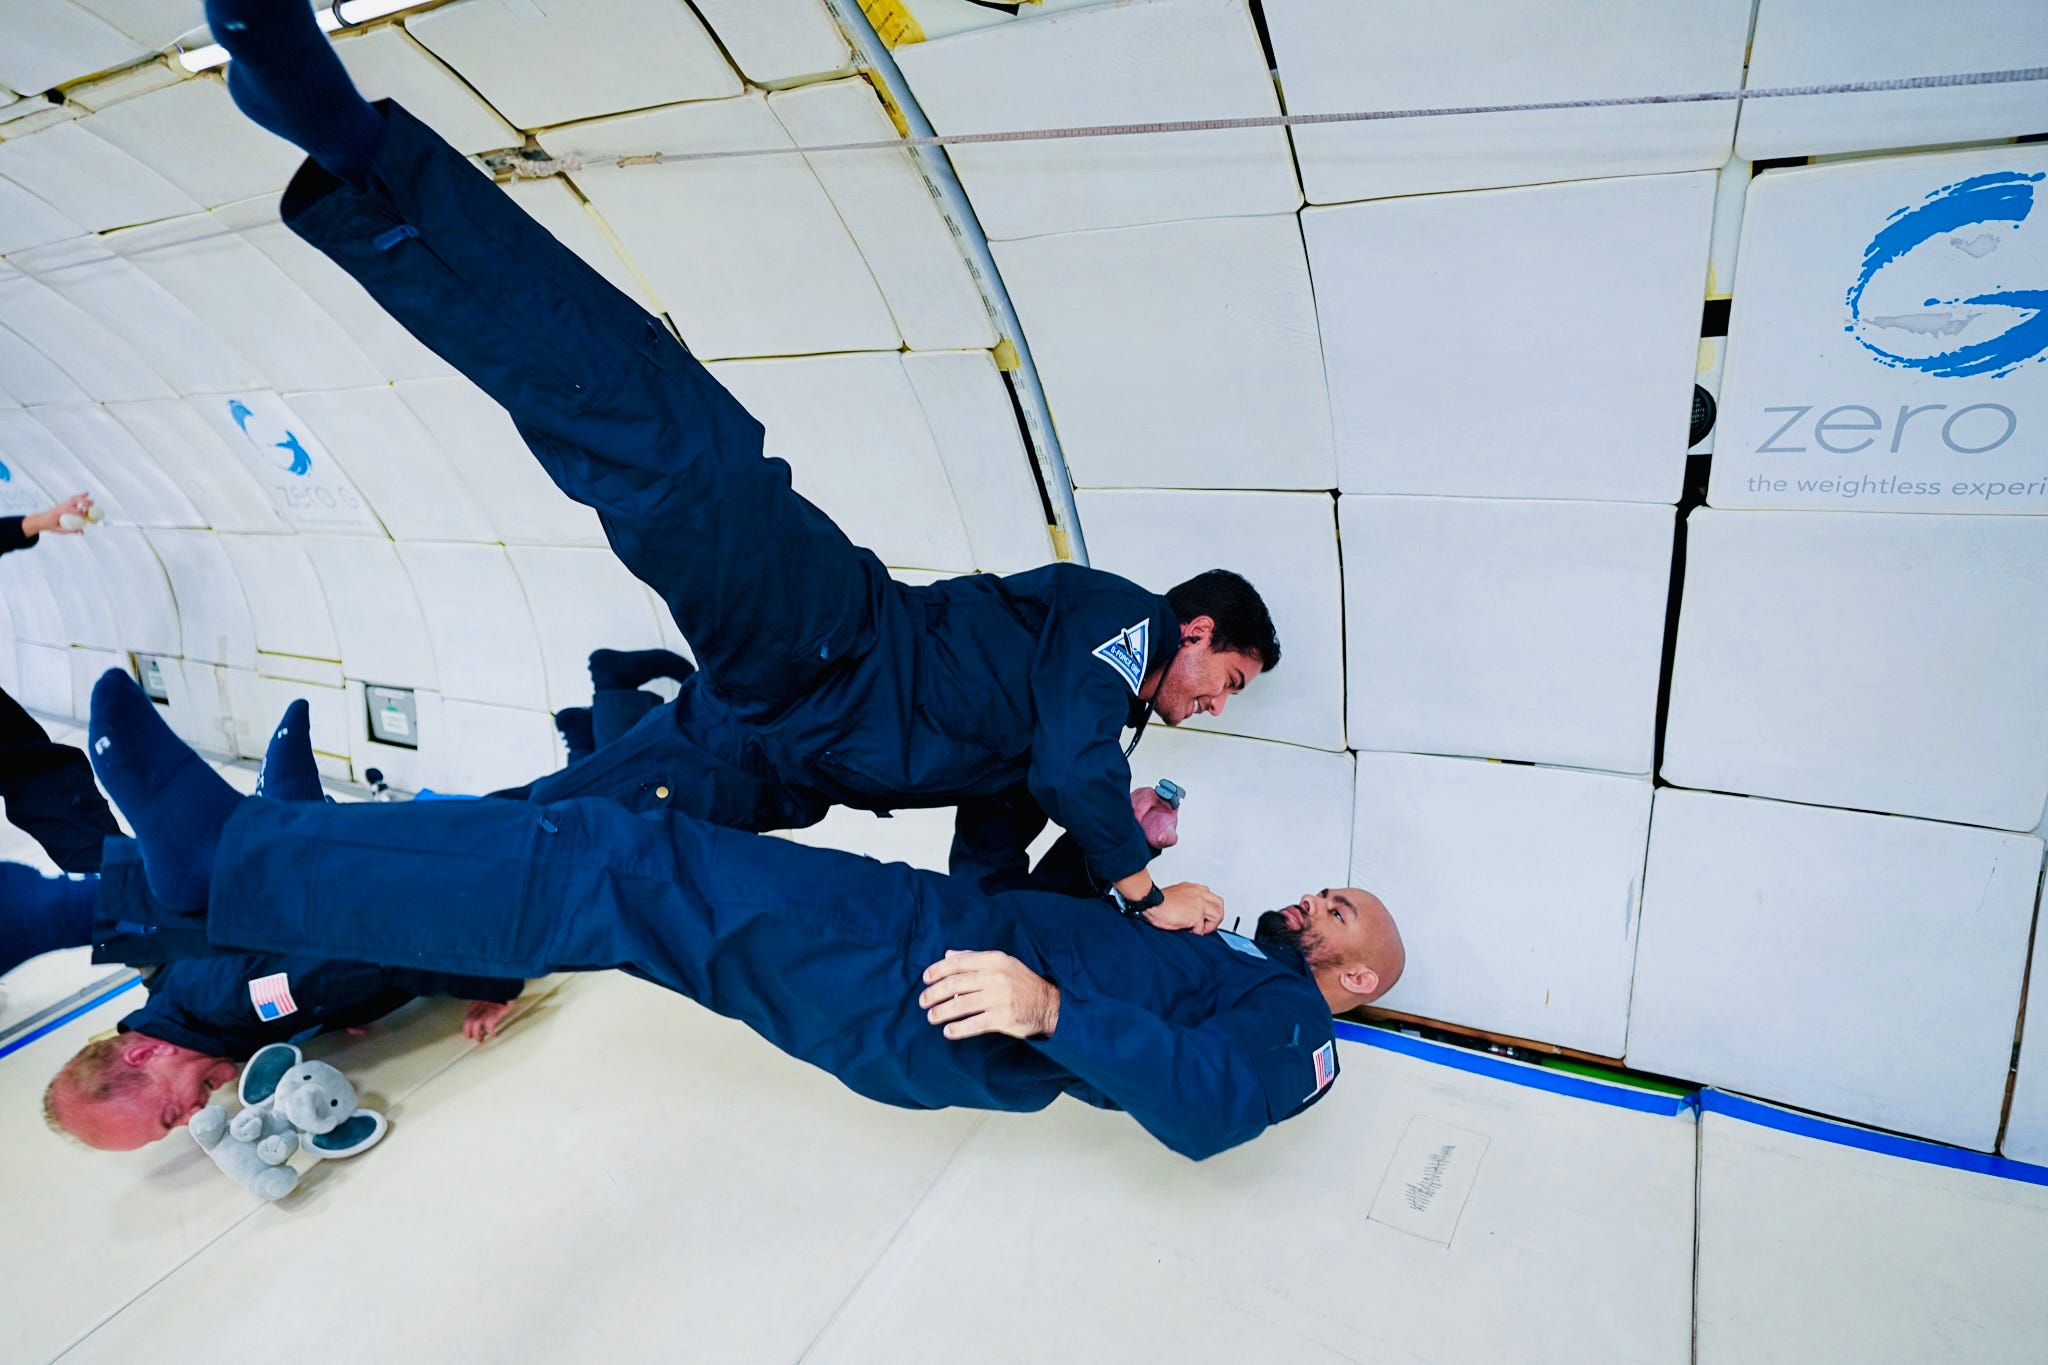 Triaging a patient in zero gravity.